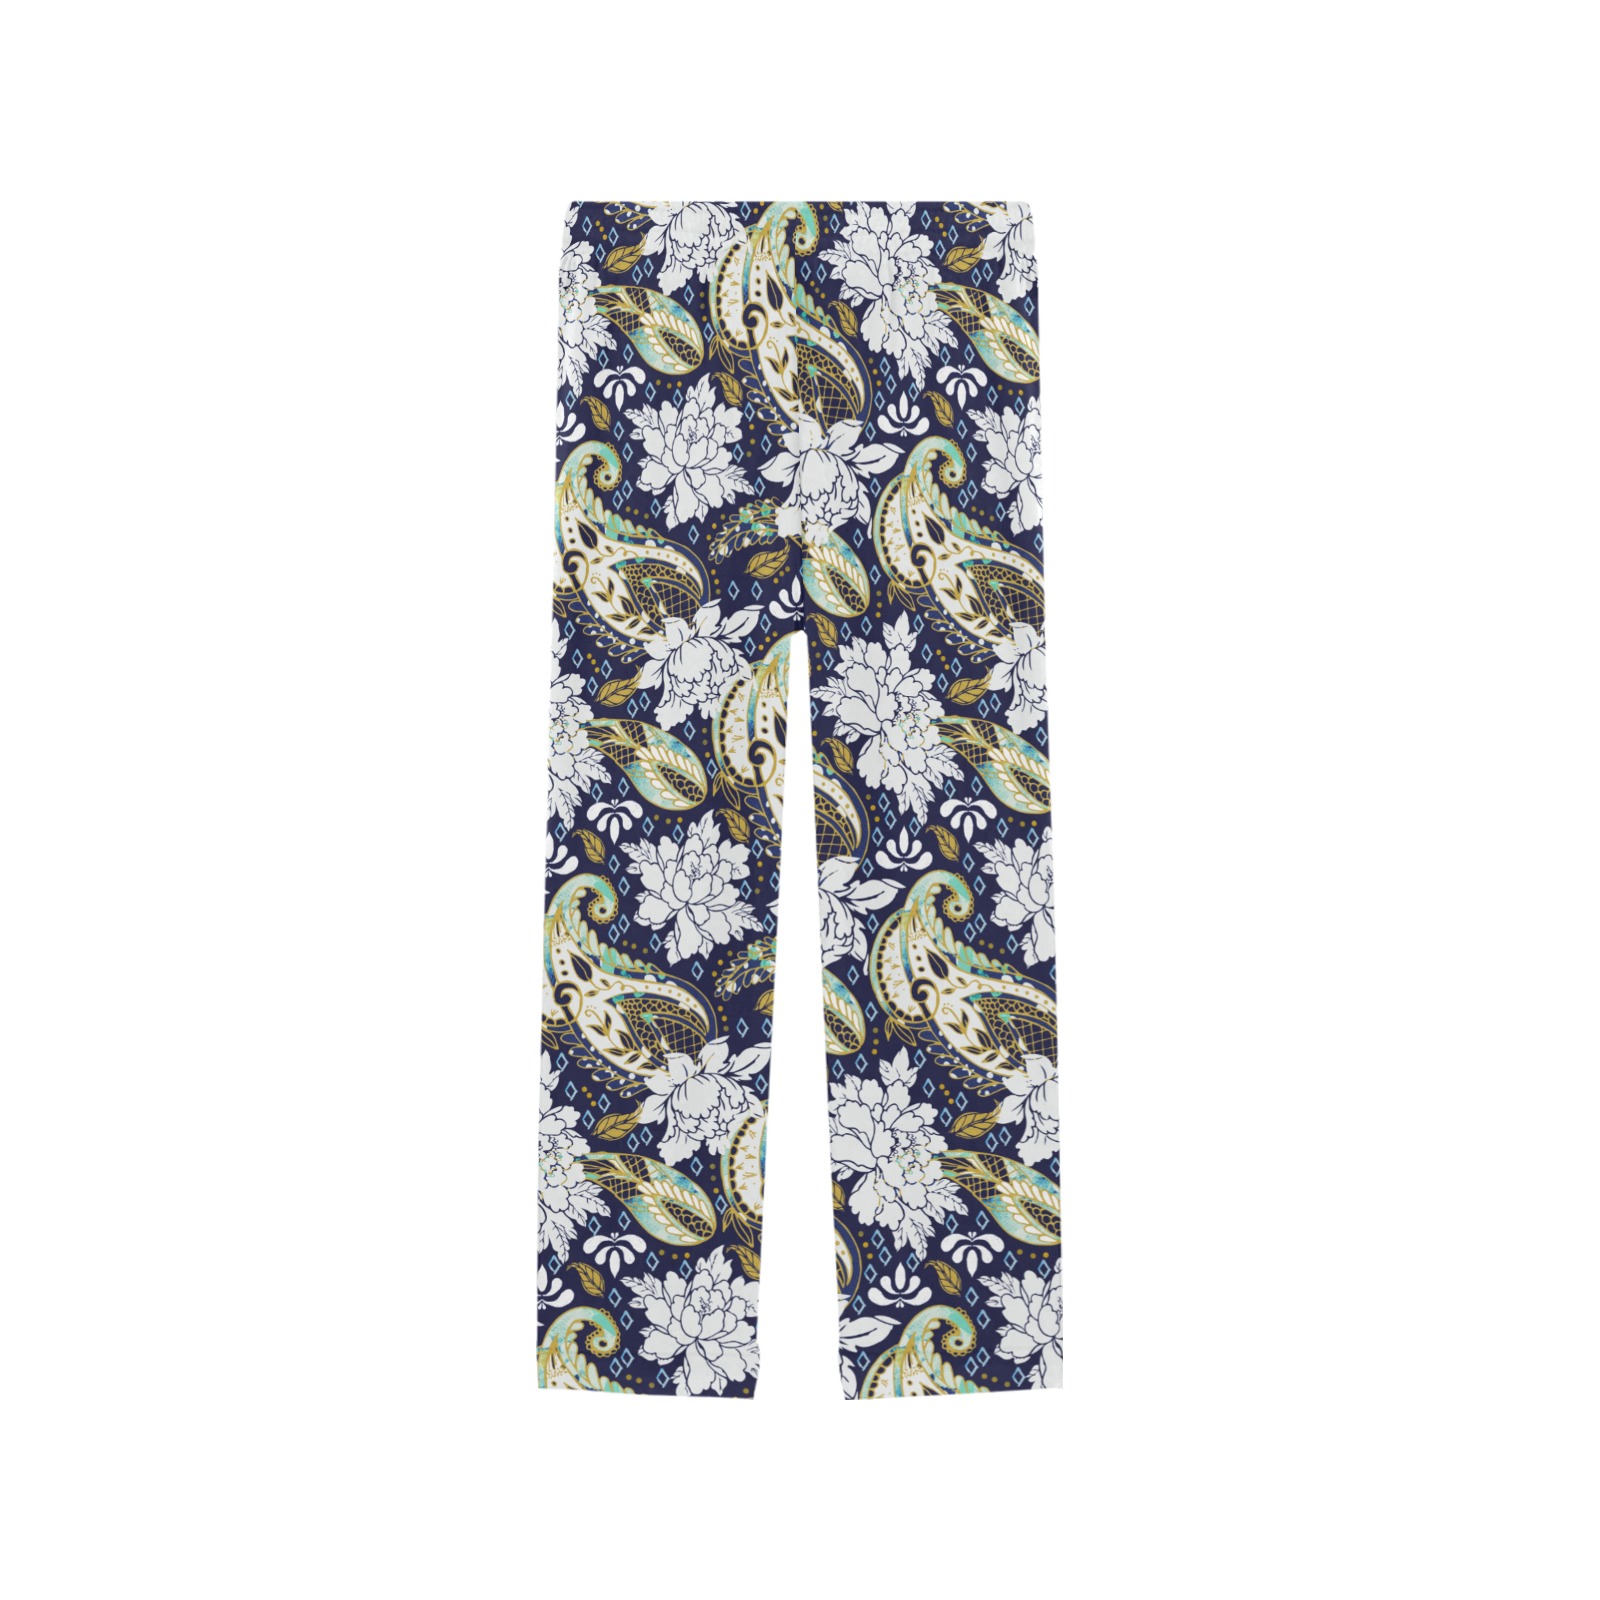 Paisleyobsession-87 Women's Pajama Trousers